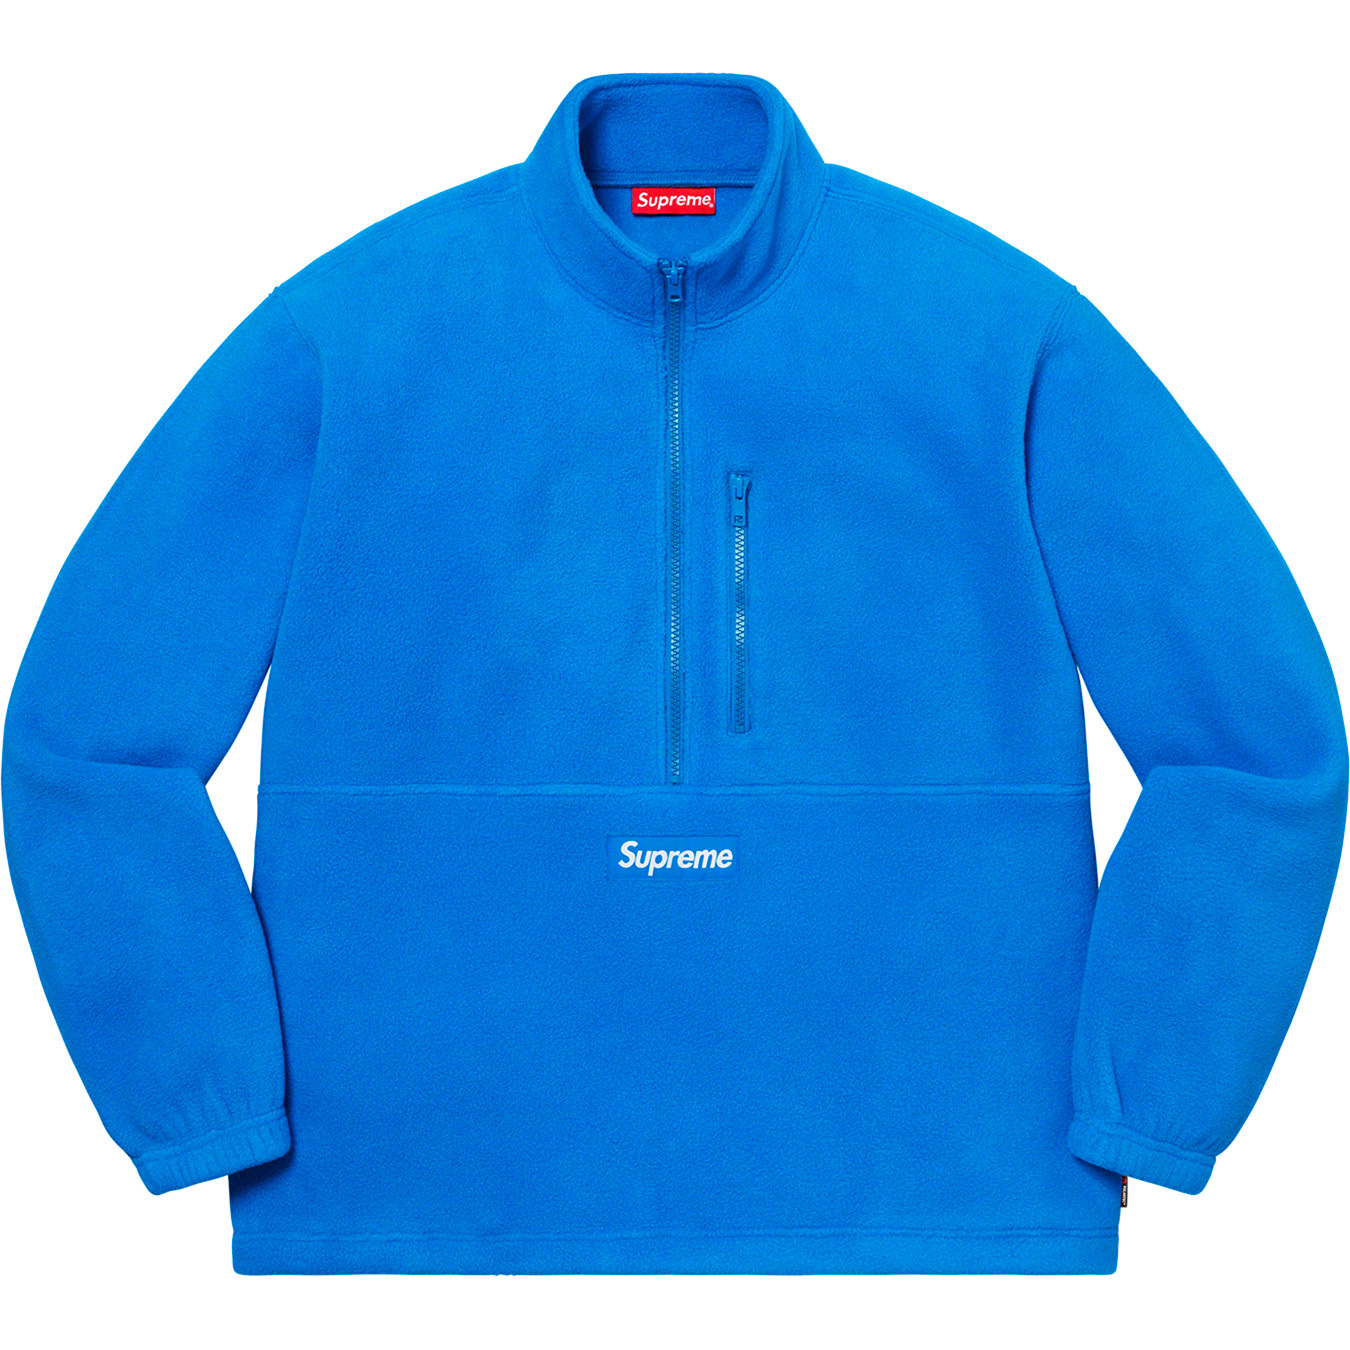 Supreme Polartec Half Zip Pullover